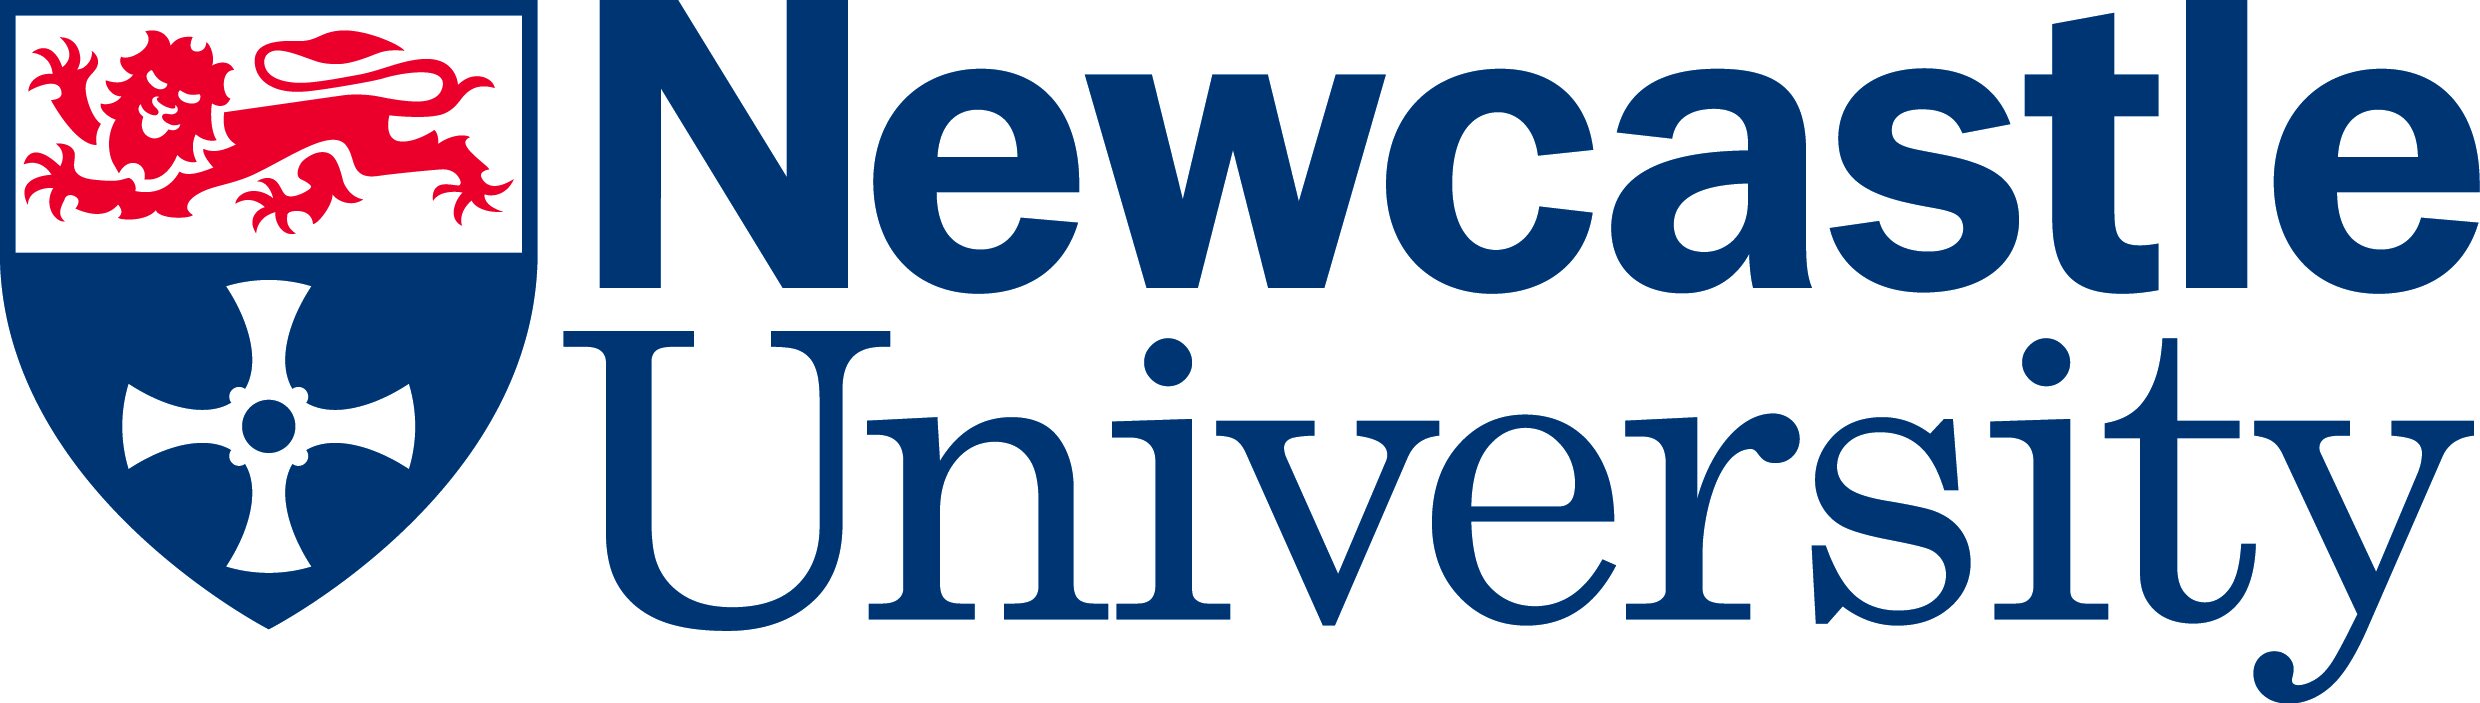 Newcastle University logo.png